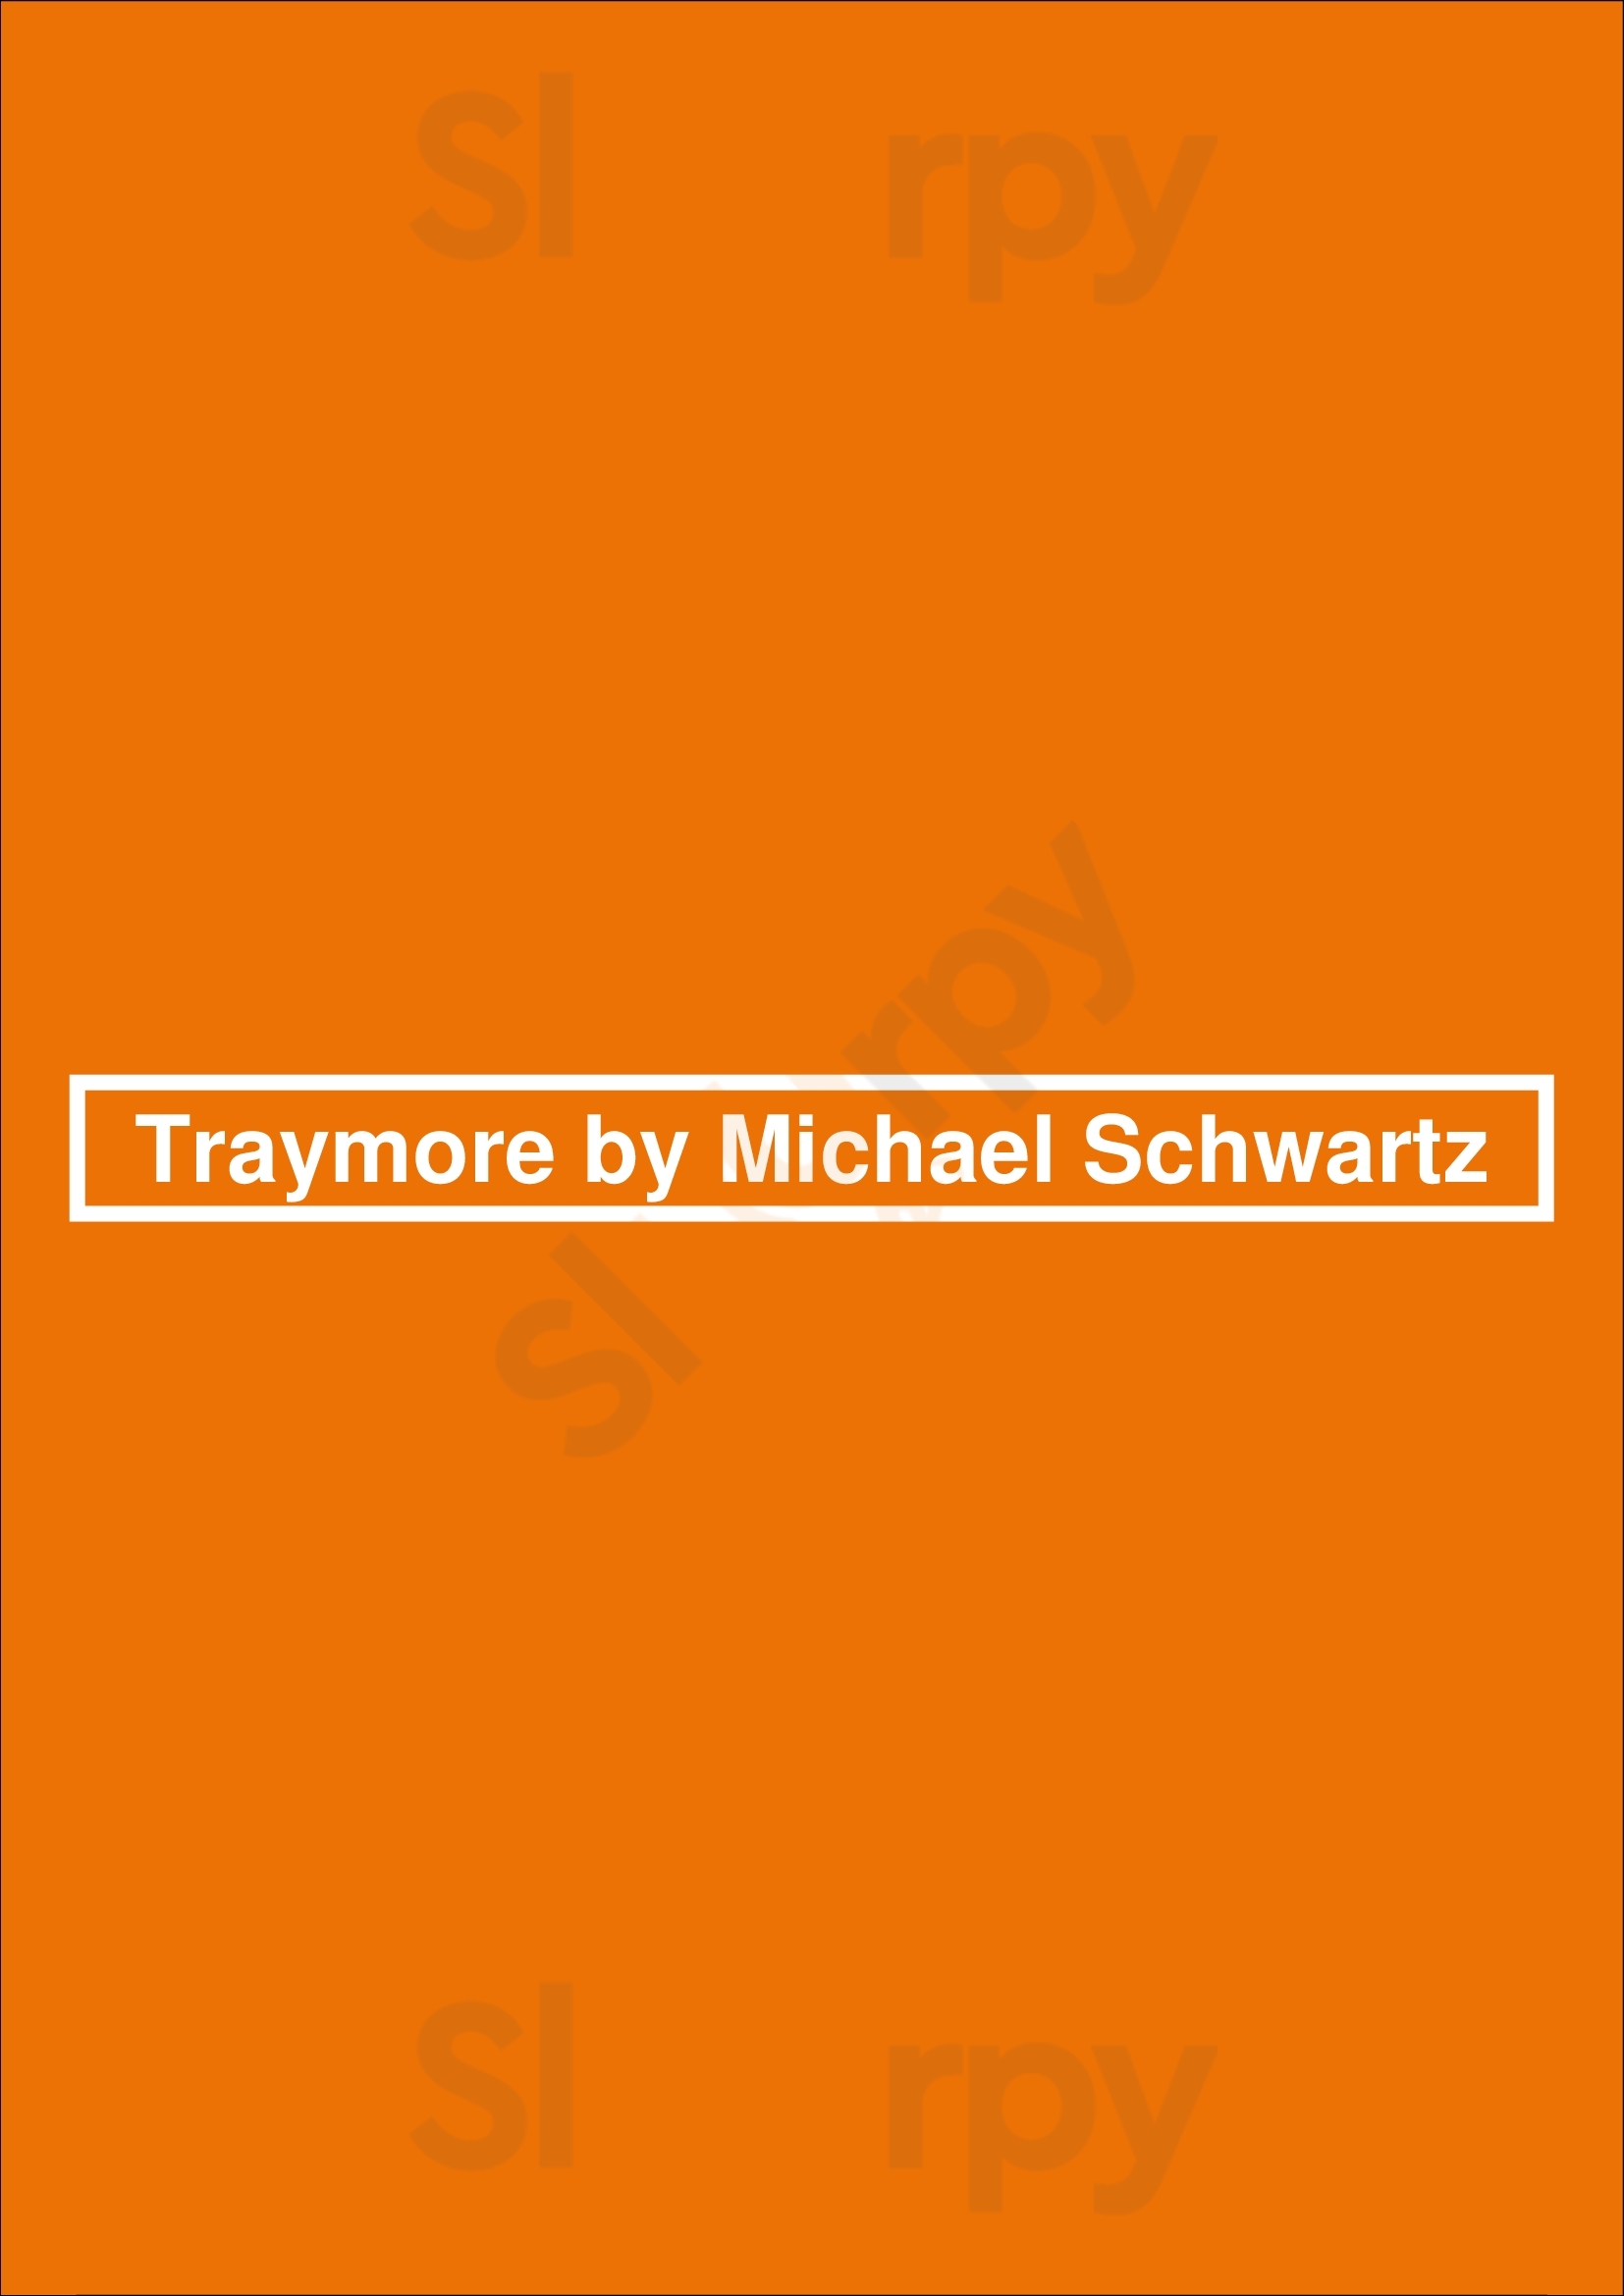 Traymore By Michael Schwartz Miami Beach Menu - 1